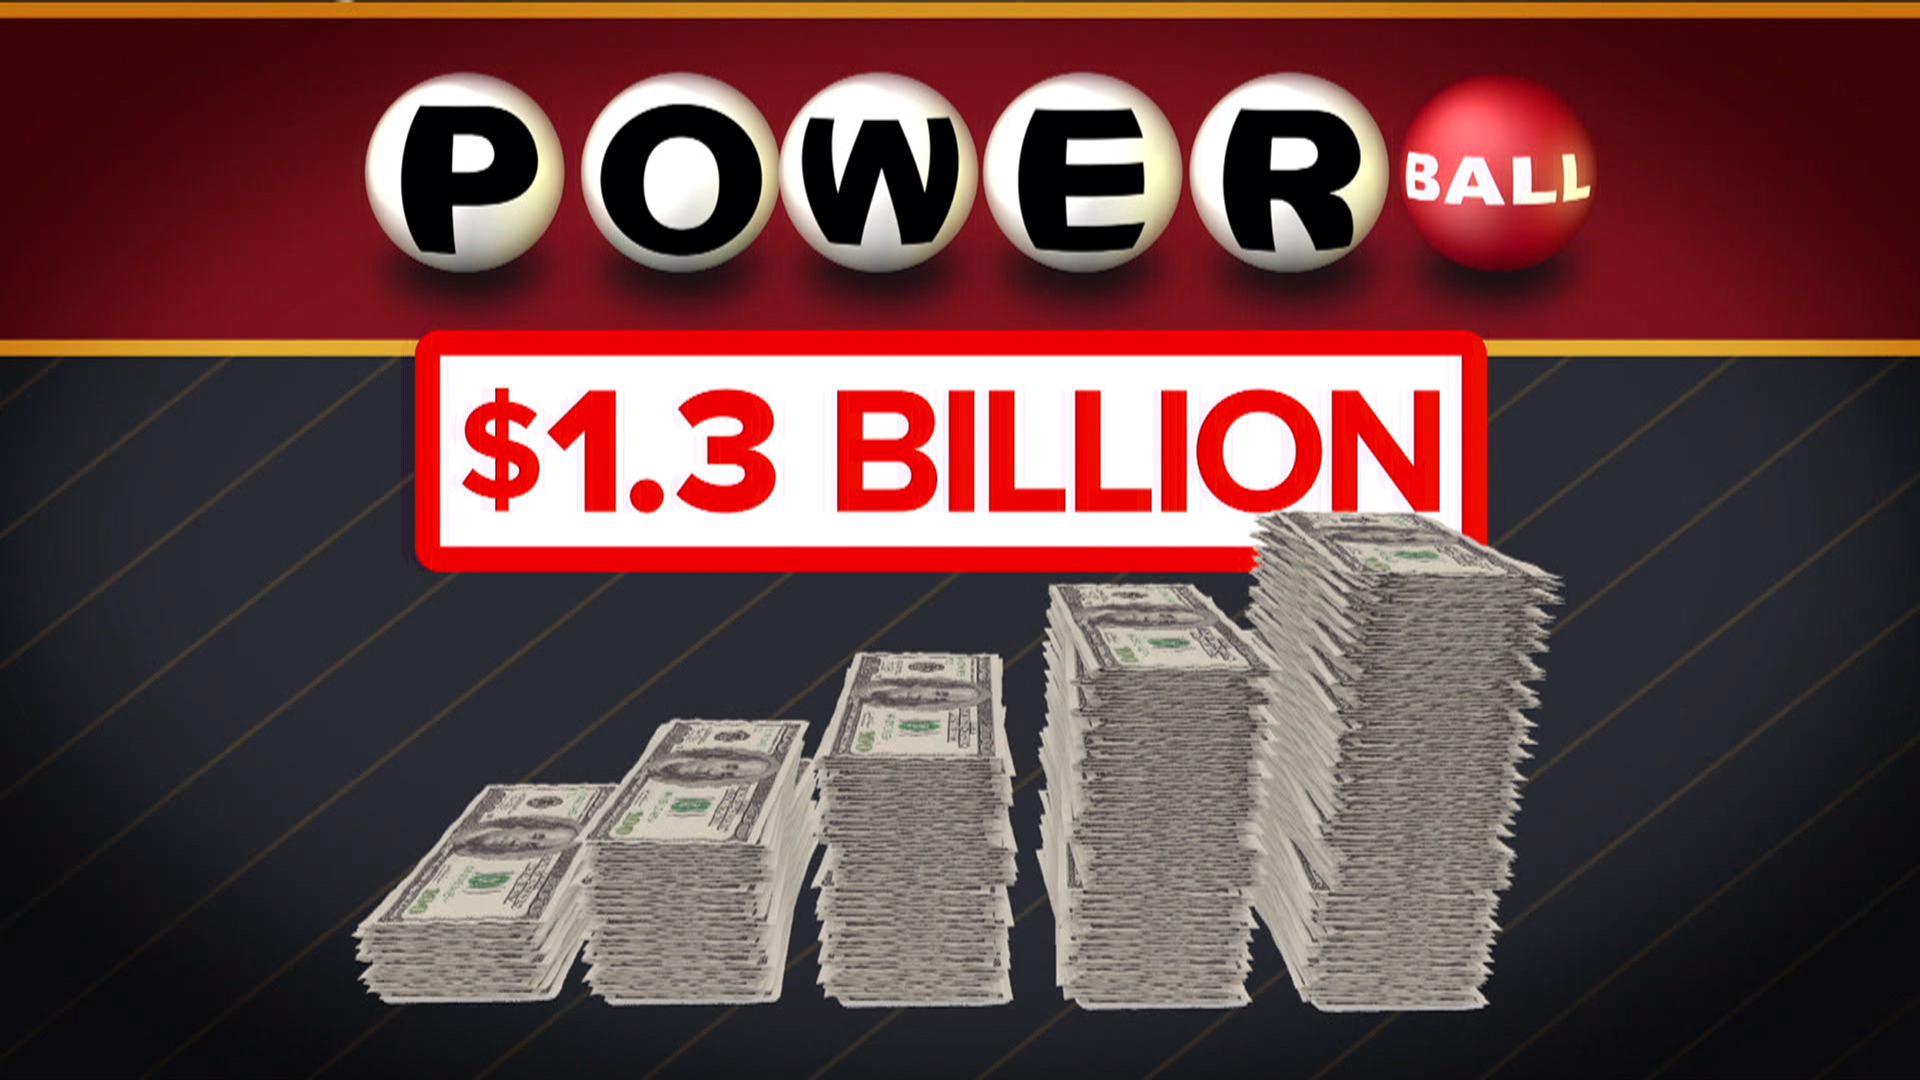 No Powerball jackpot winner, pot grows to $1.3 billion - TODAY.com